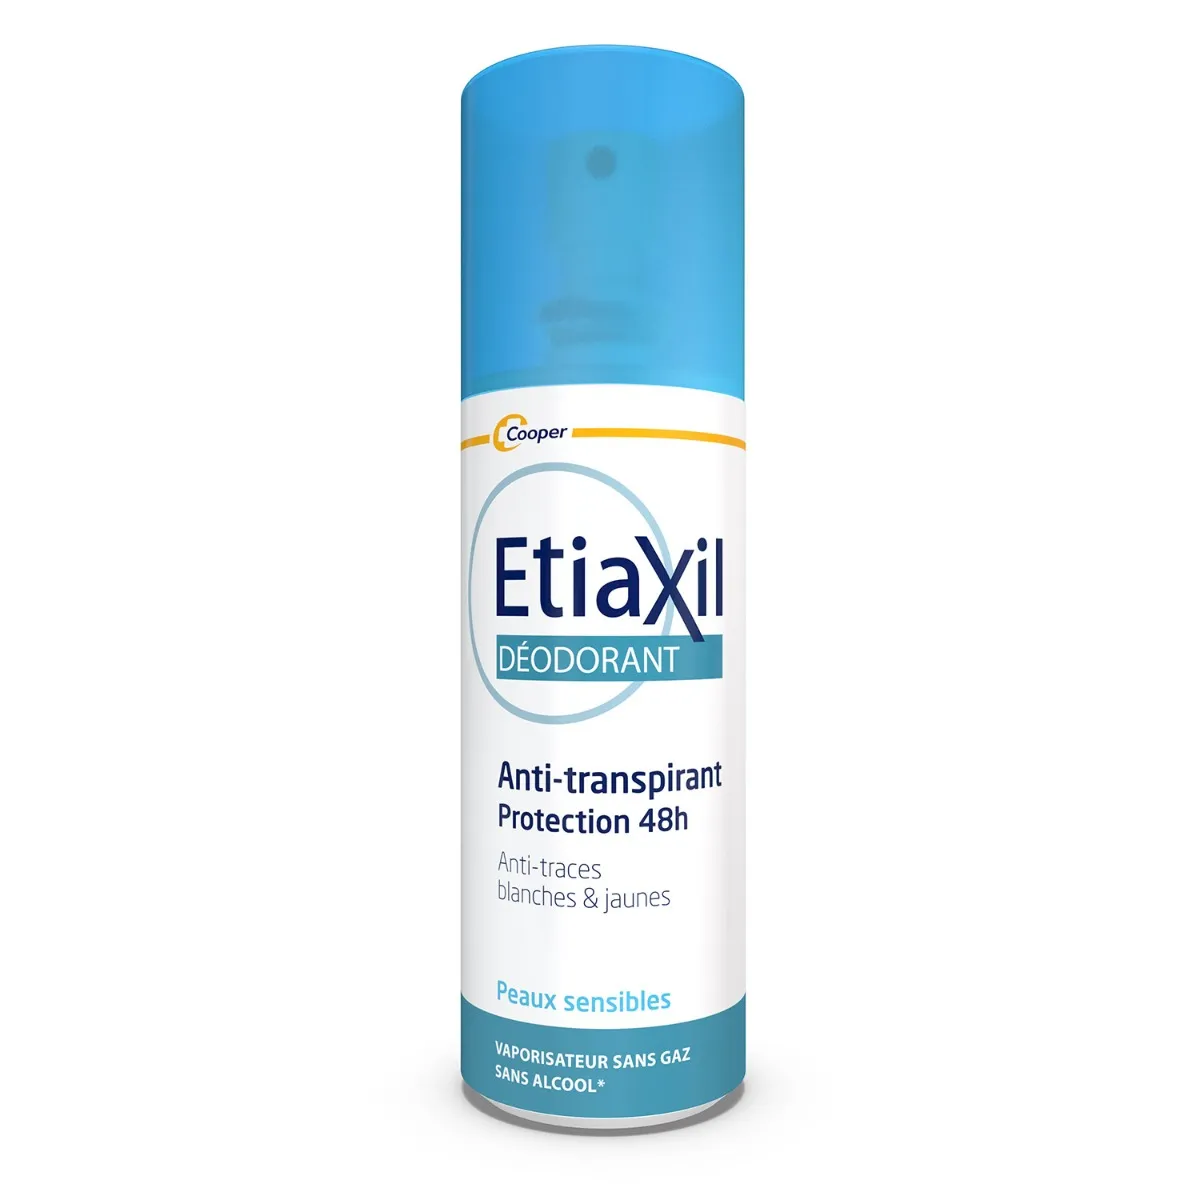 etiaxil anti-transpirant anti-traces 48h aerosol 150ml